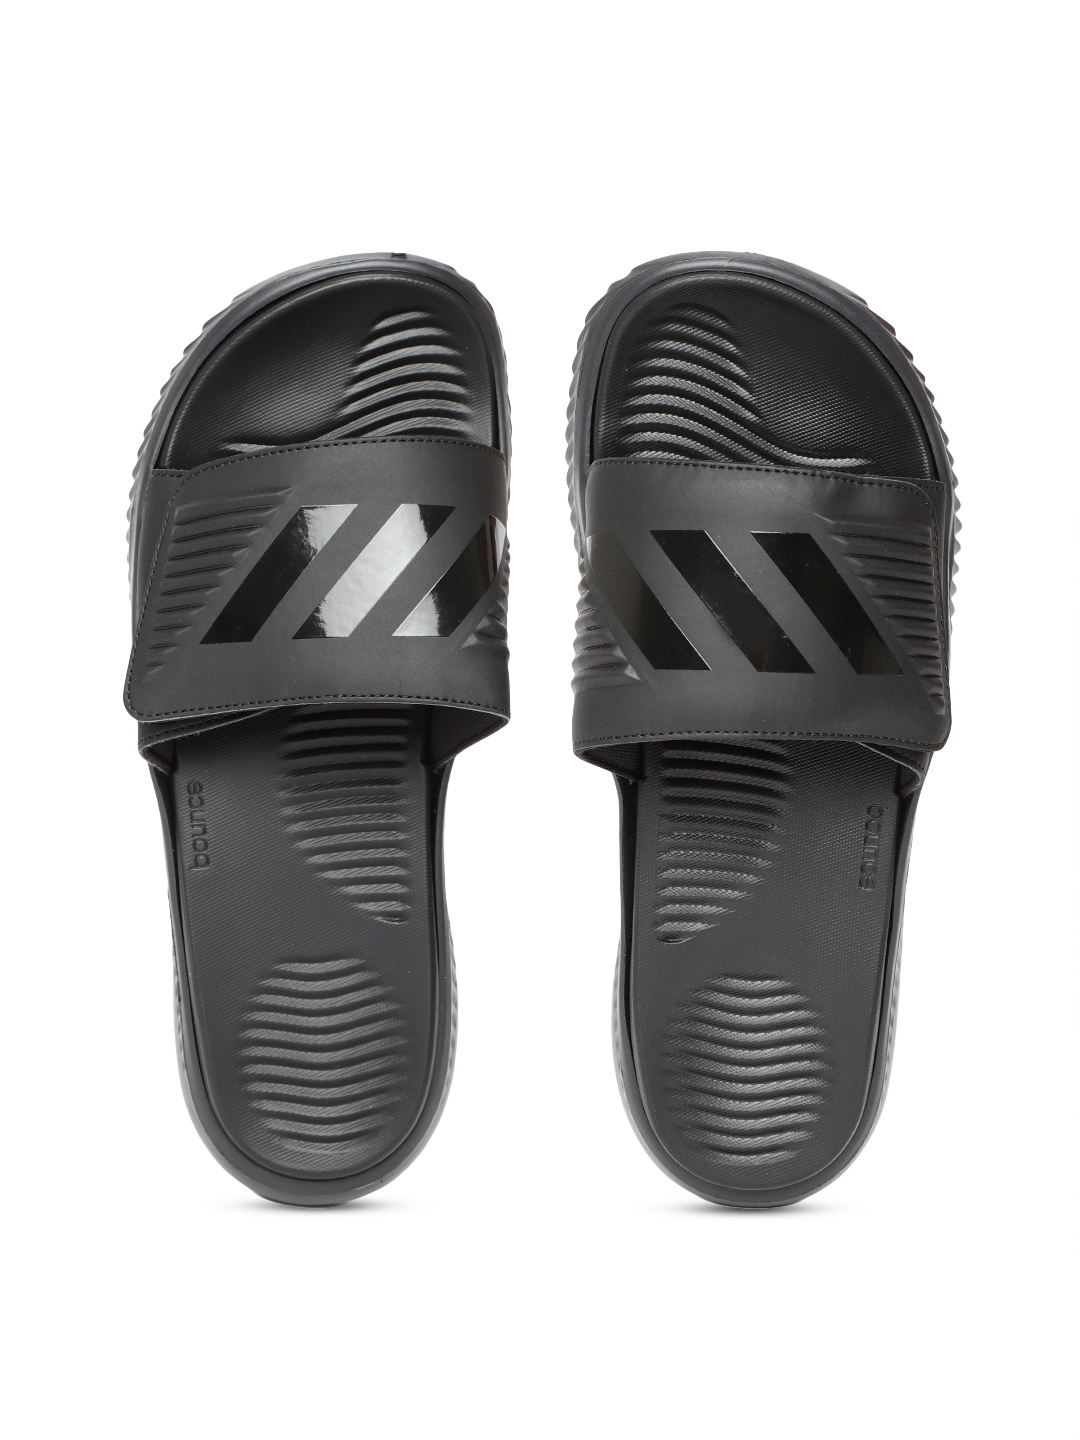 adidas alphabounce slippers